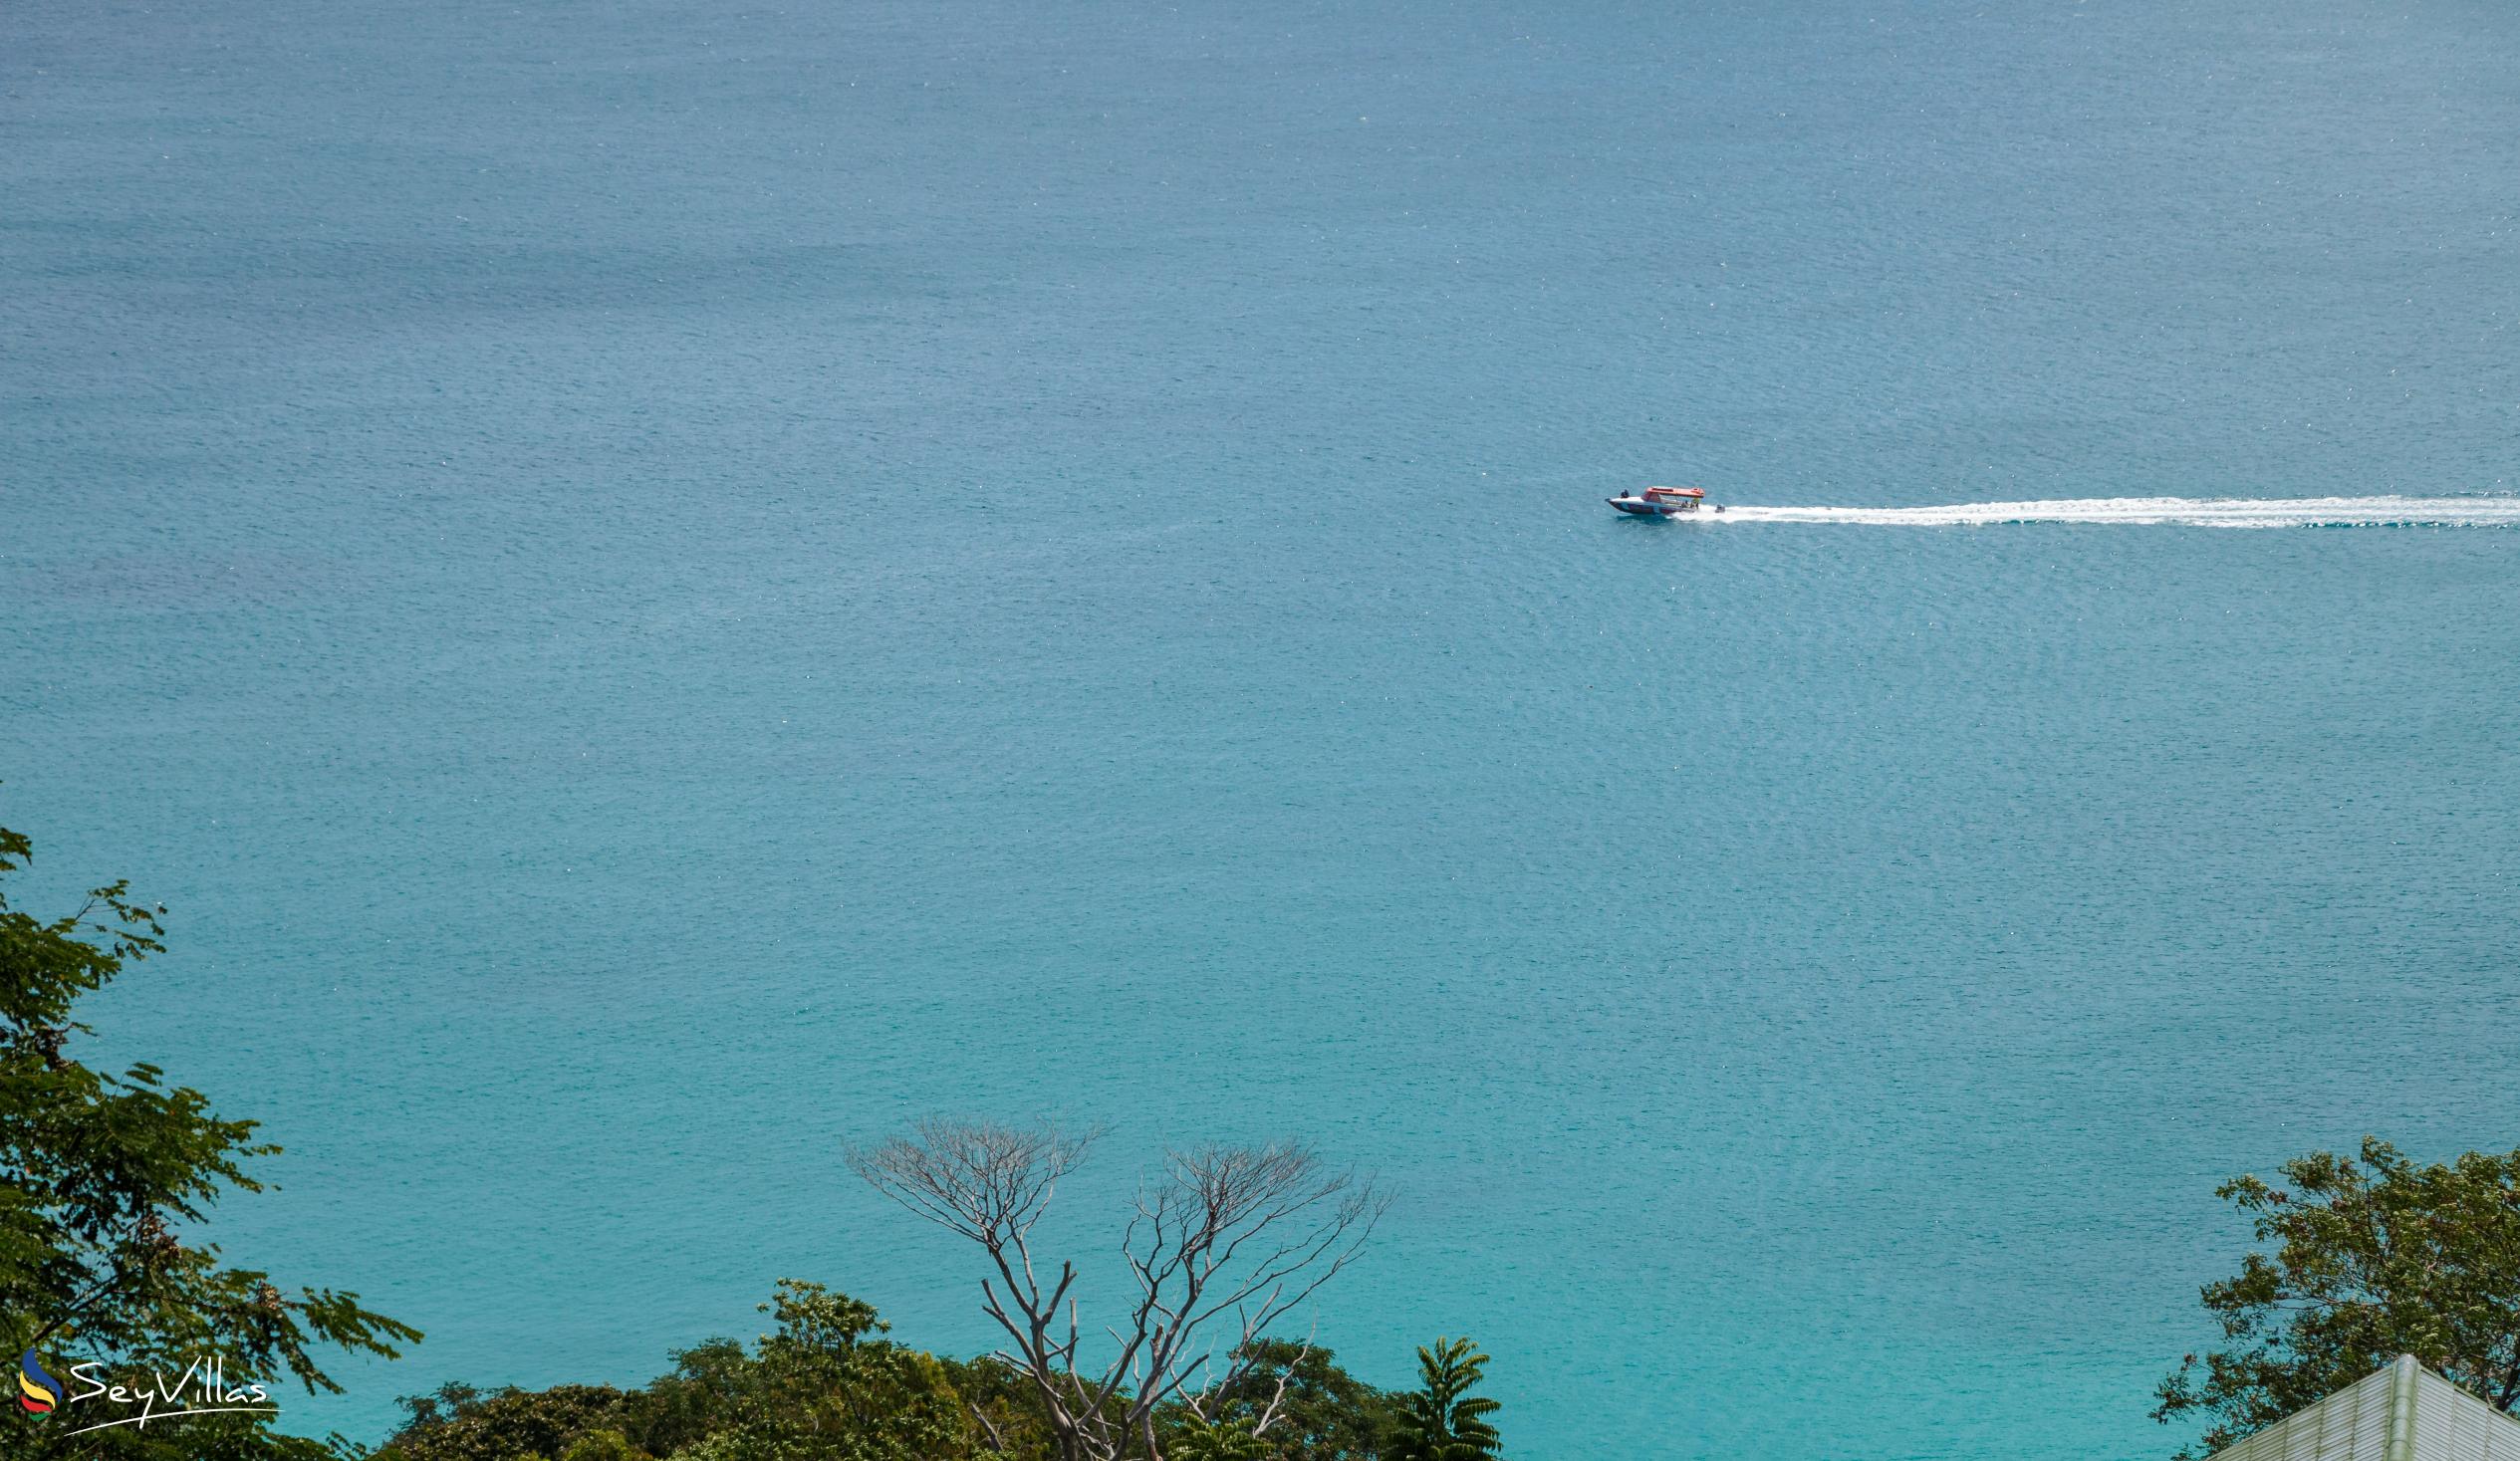 Photo 20: Reve Bleu - Location - Mahé (Seychelles)